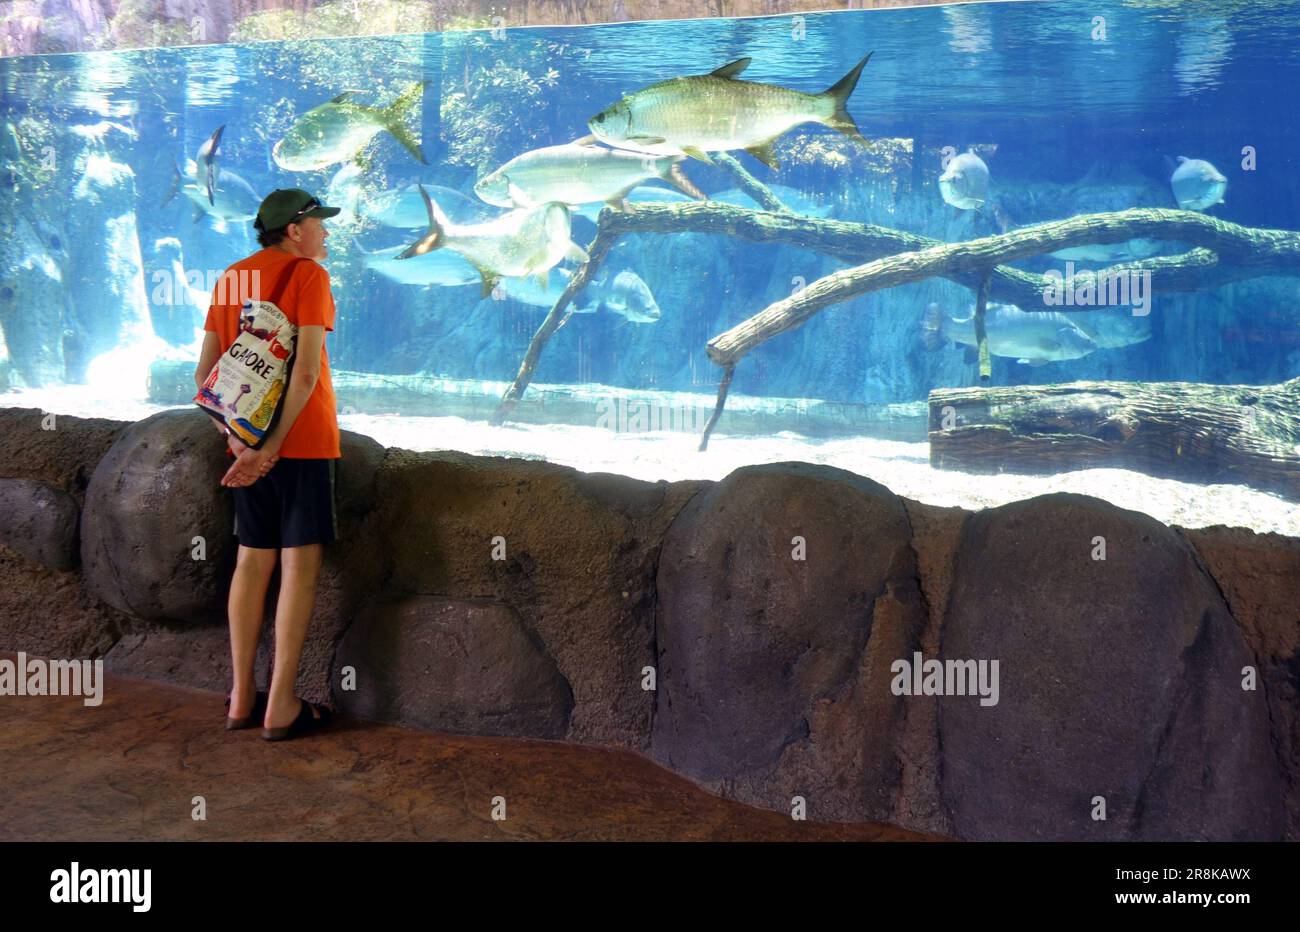 Man looking at tank full of large tarpon fish, River Wonders exhibit, Singapore Zoo. No MR or PR Stock Photo